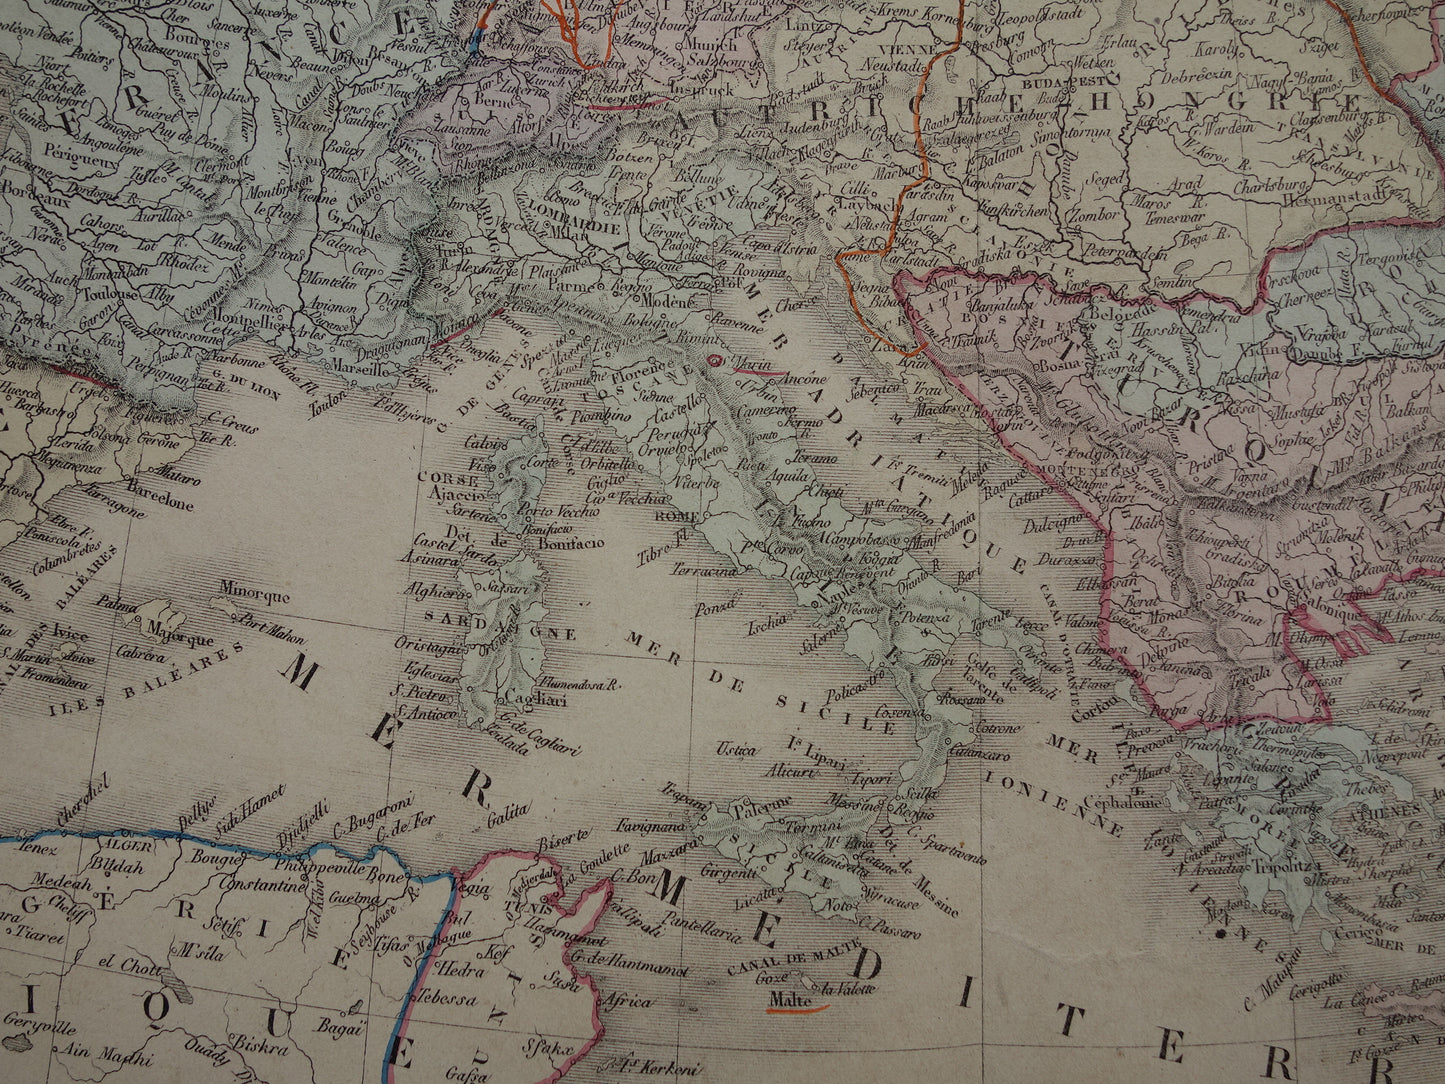 EUROPA oude landkaart van Europa uit 1876 originele antieke kaart Europees continent vintage poster